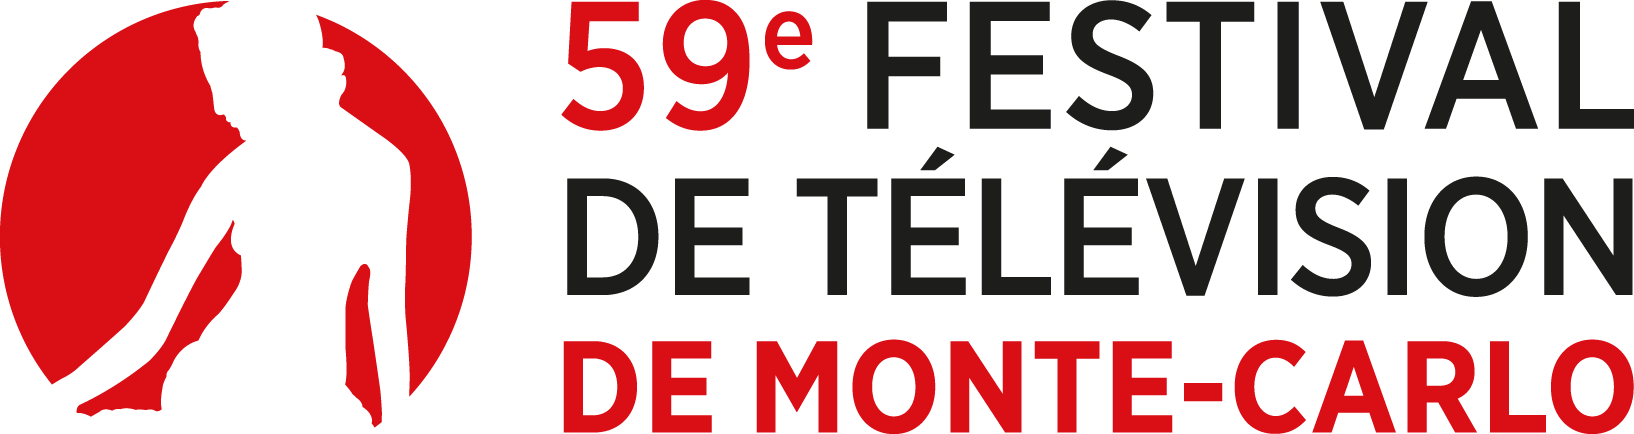 59e-festival-de-television-de-monte-carlo-logo